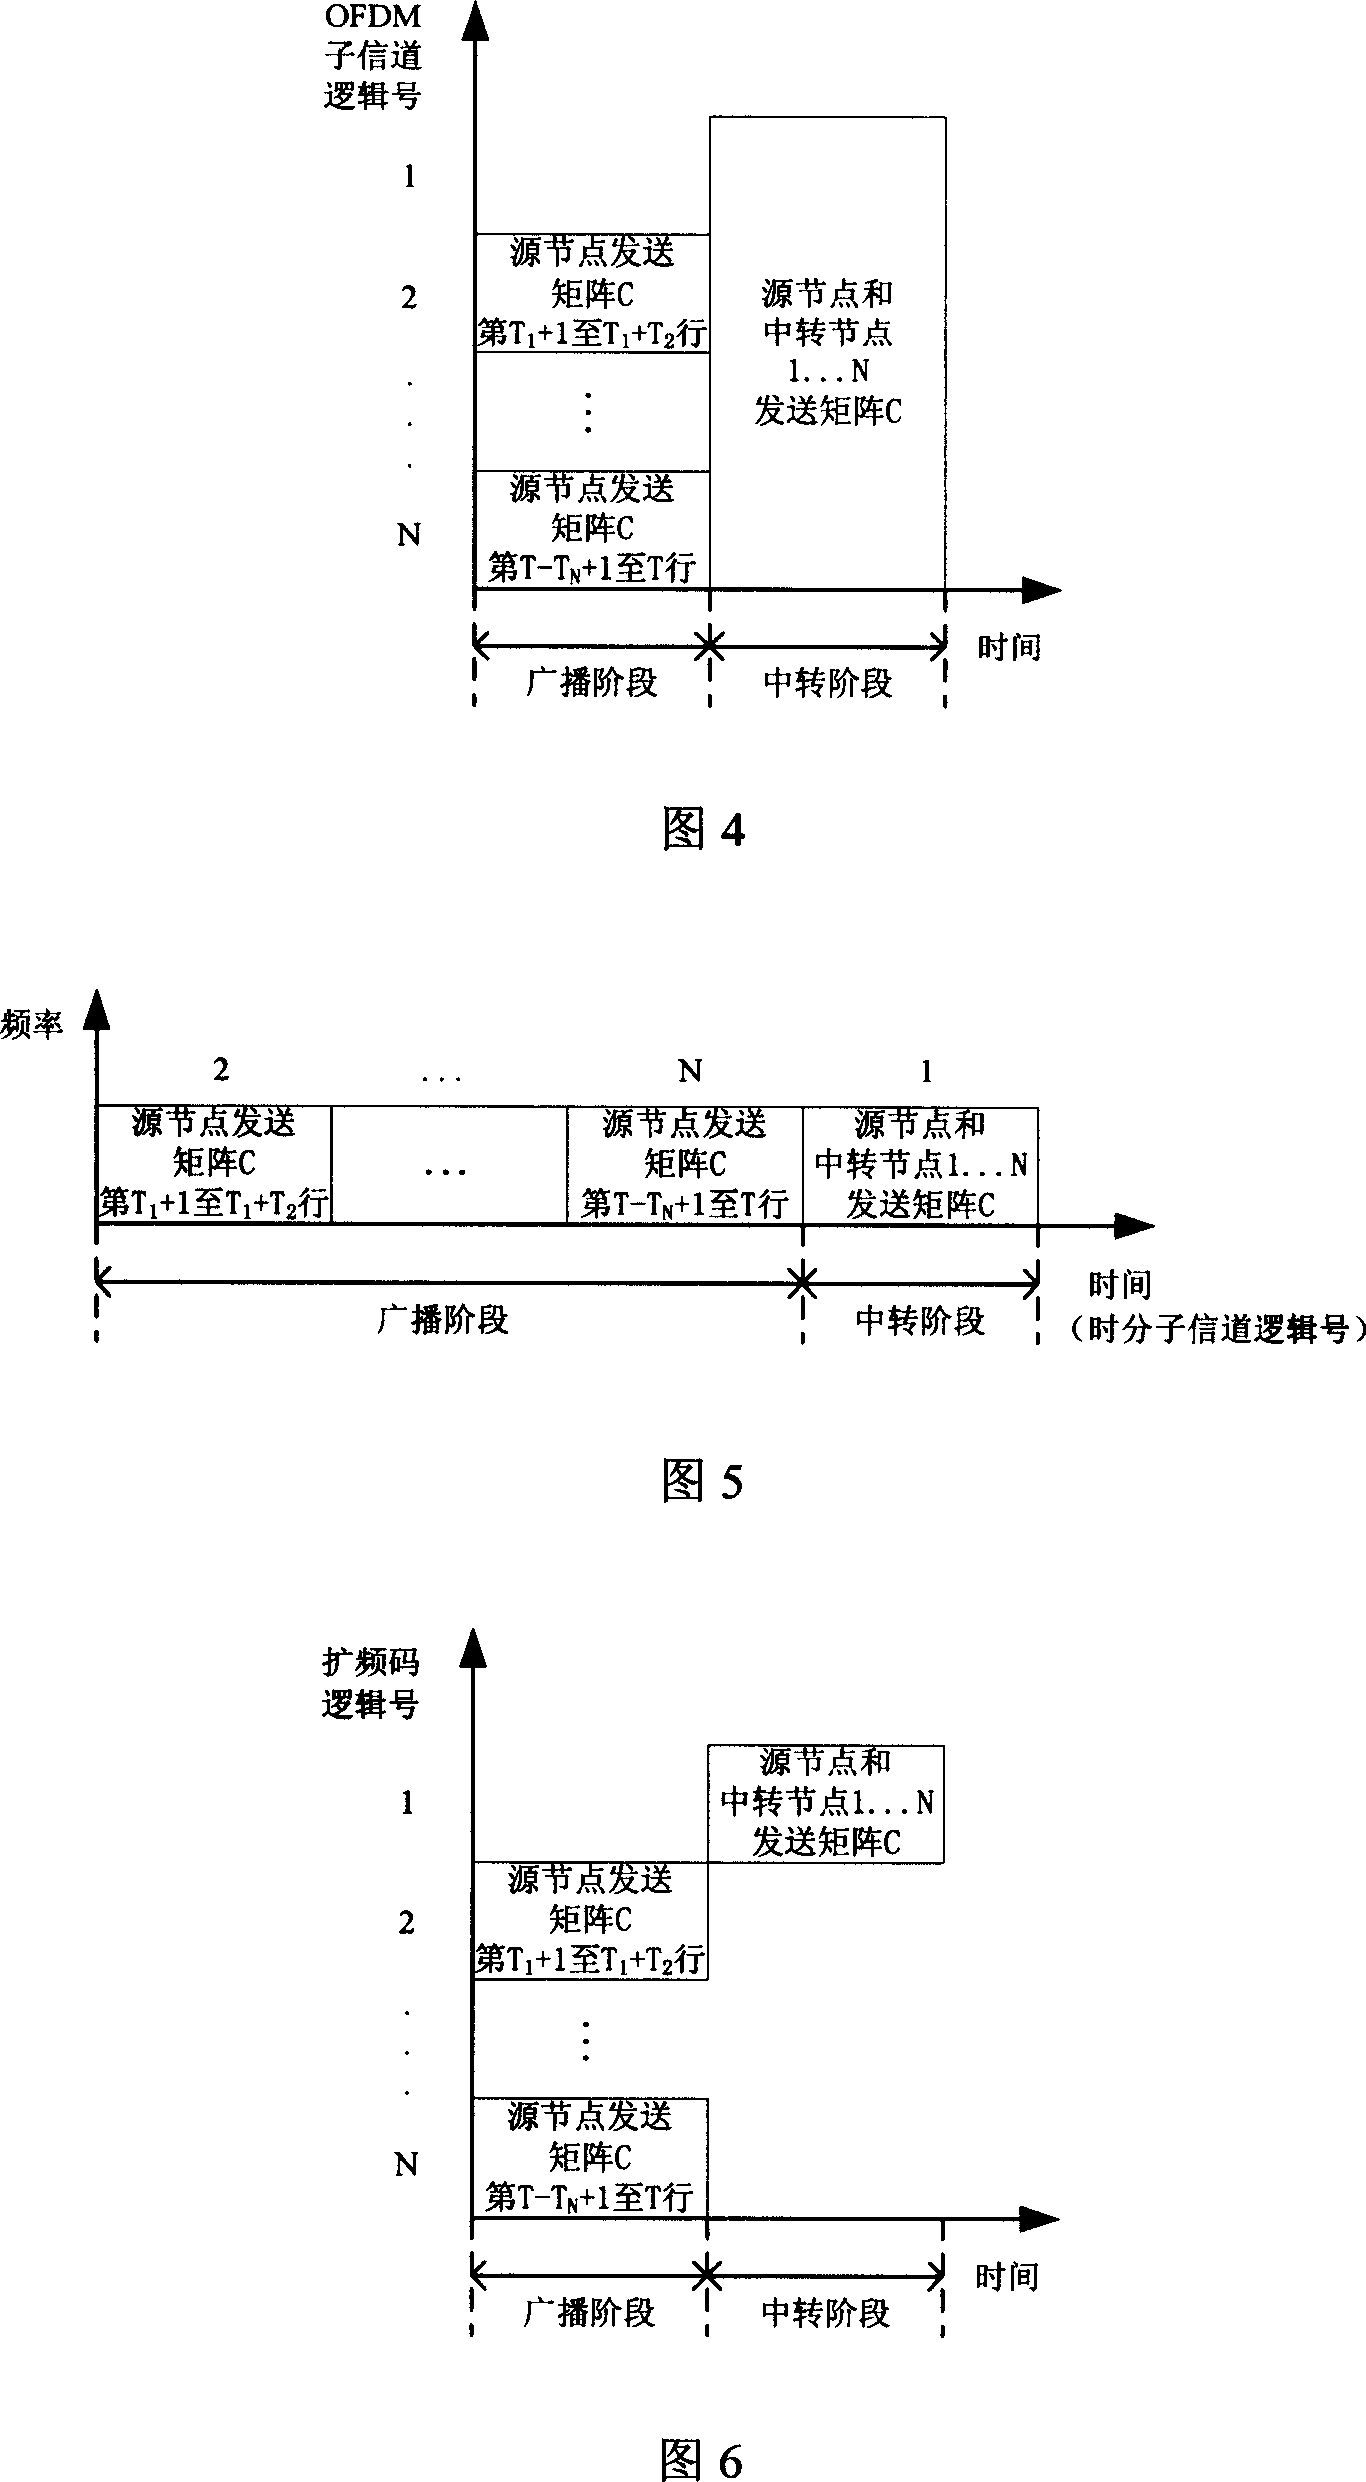 Distribution intermediate method and intermediate system